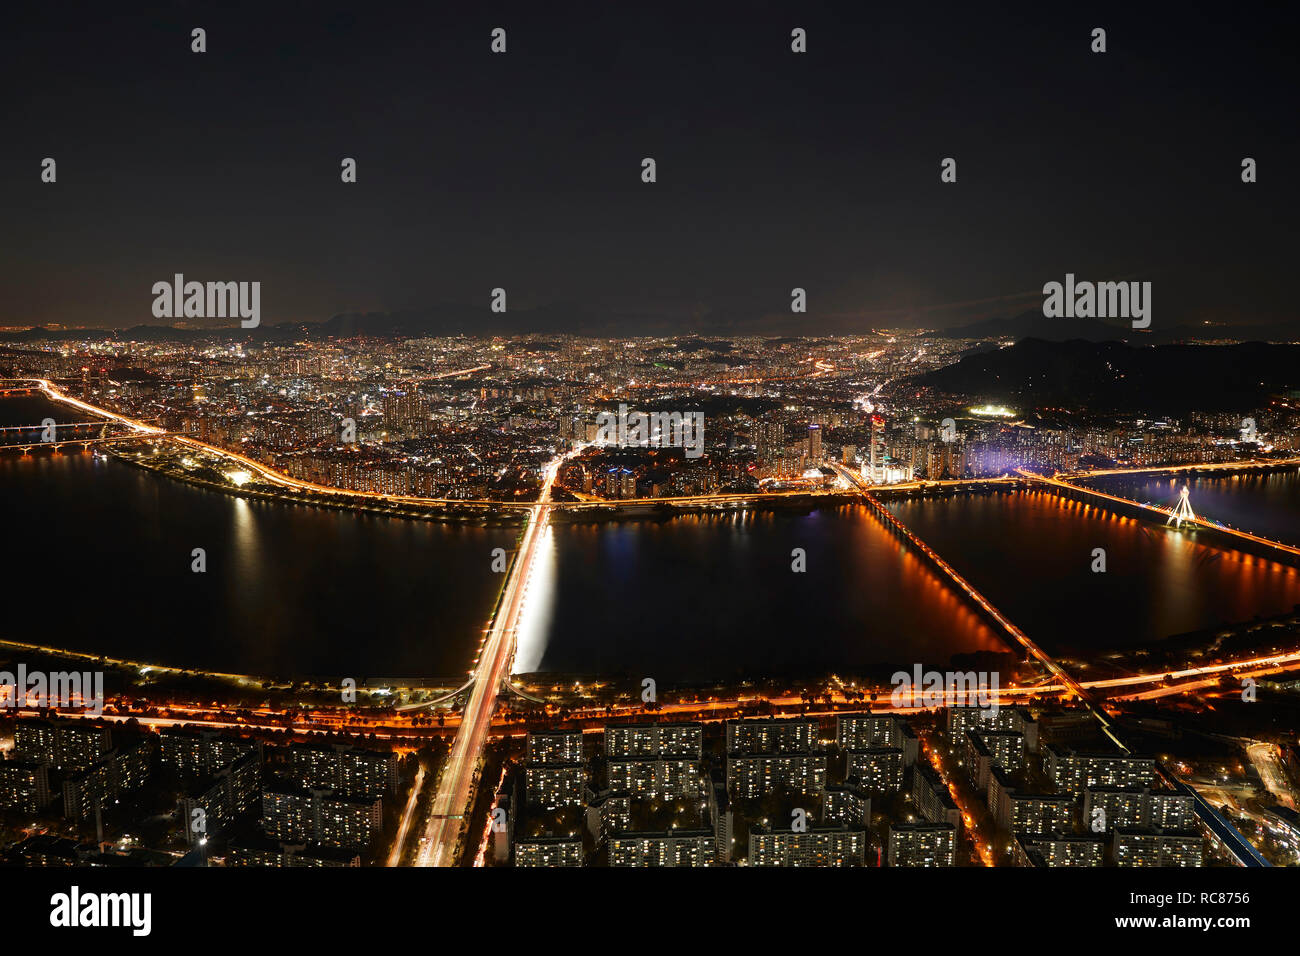 Cityscape at night, Seoul, South Korea Stock Photo